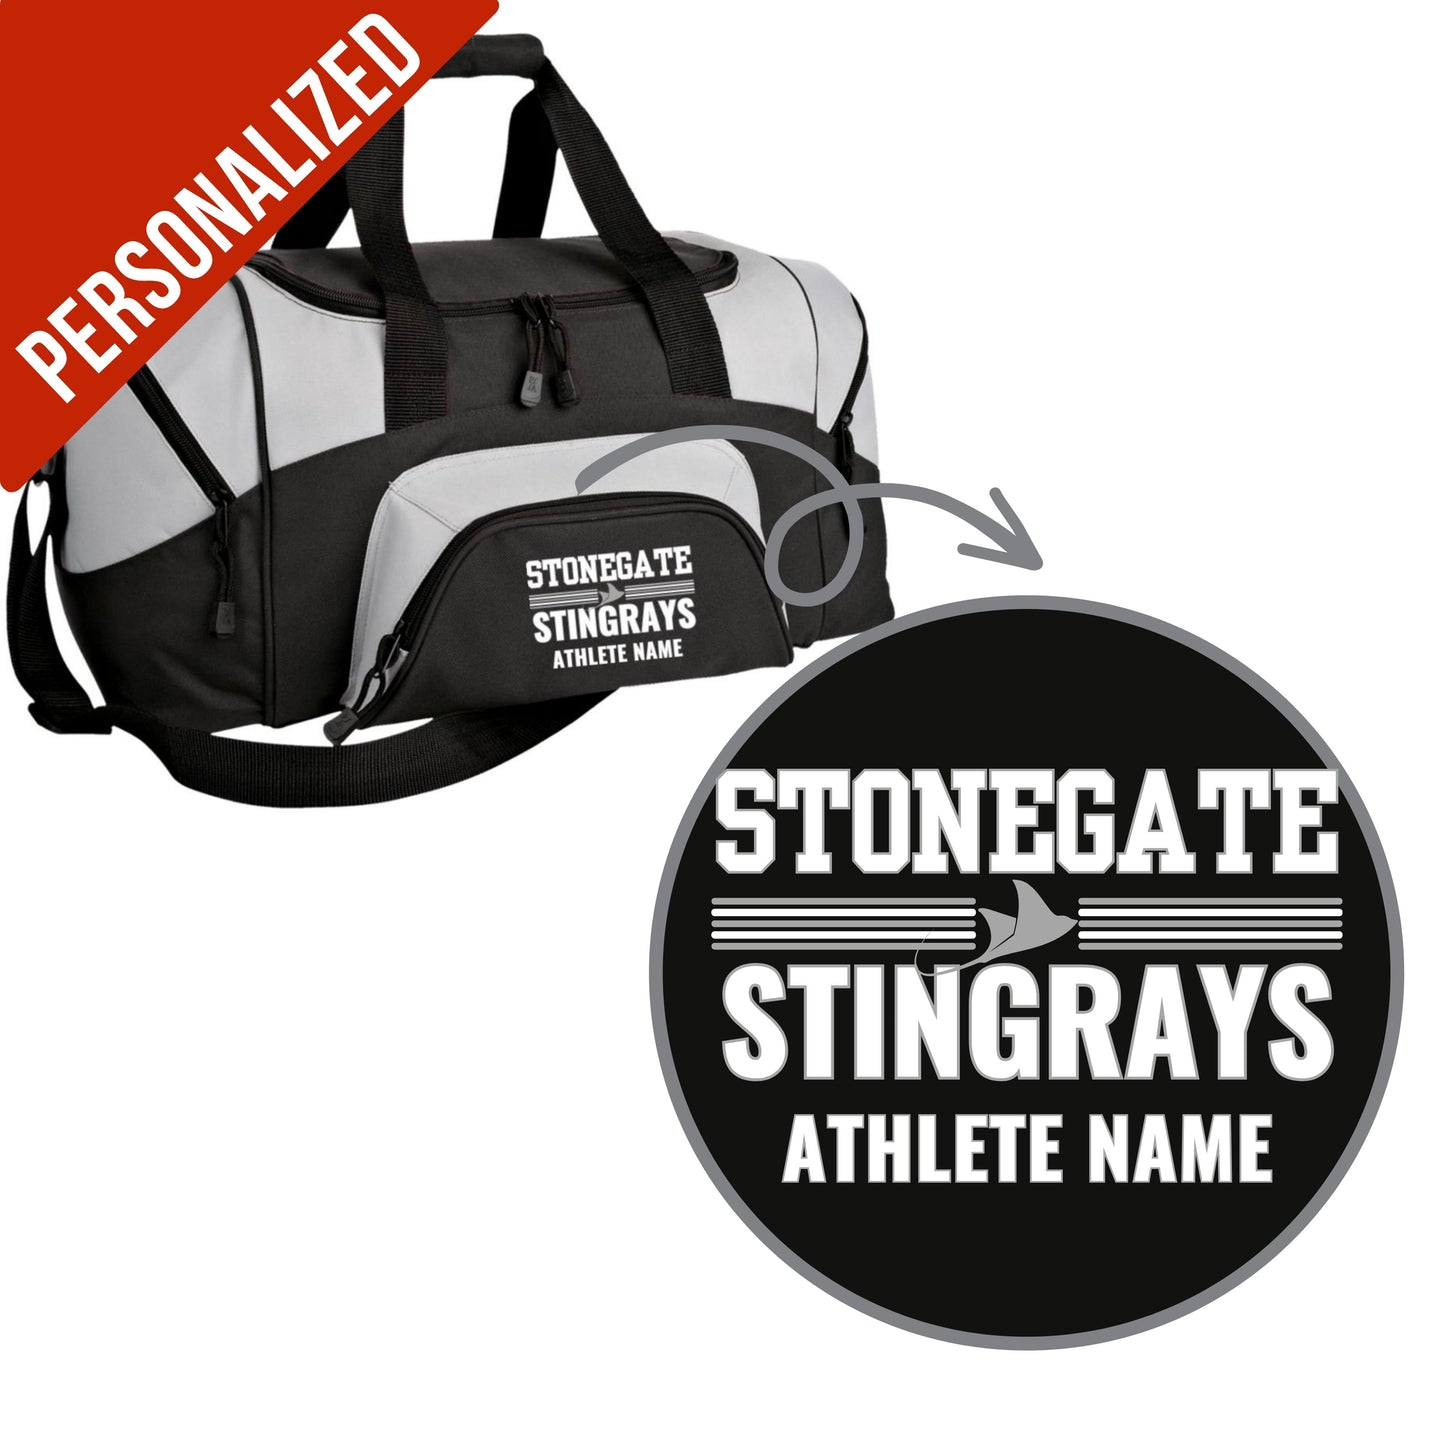 The Stingray Duffle Bag